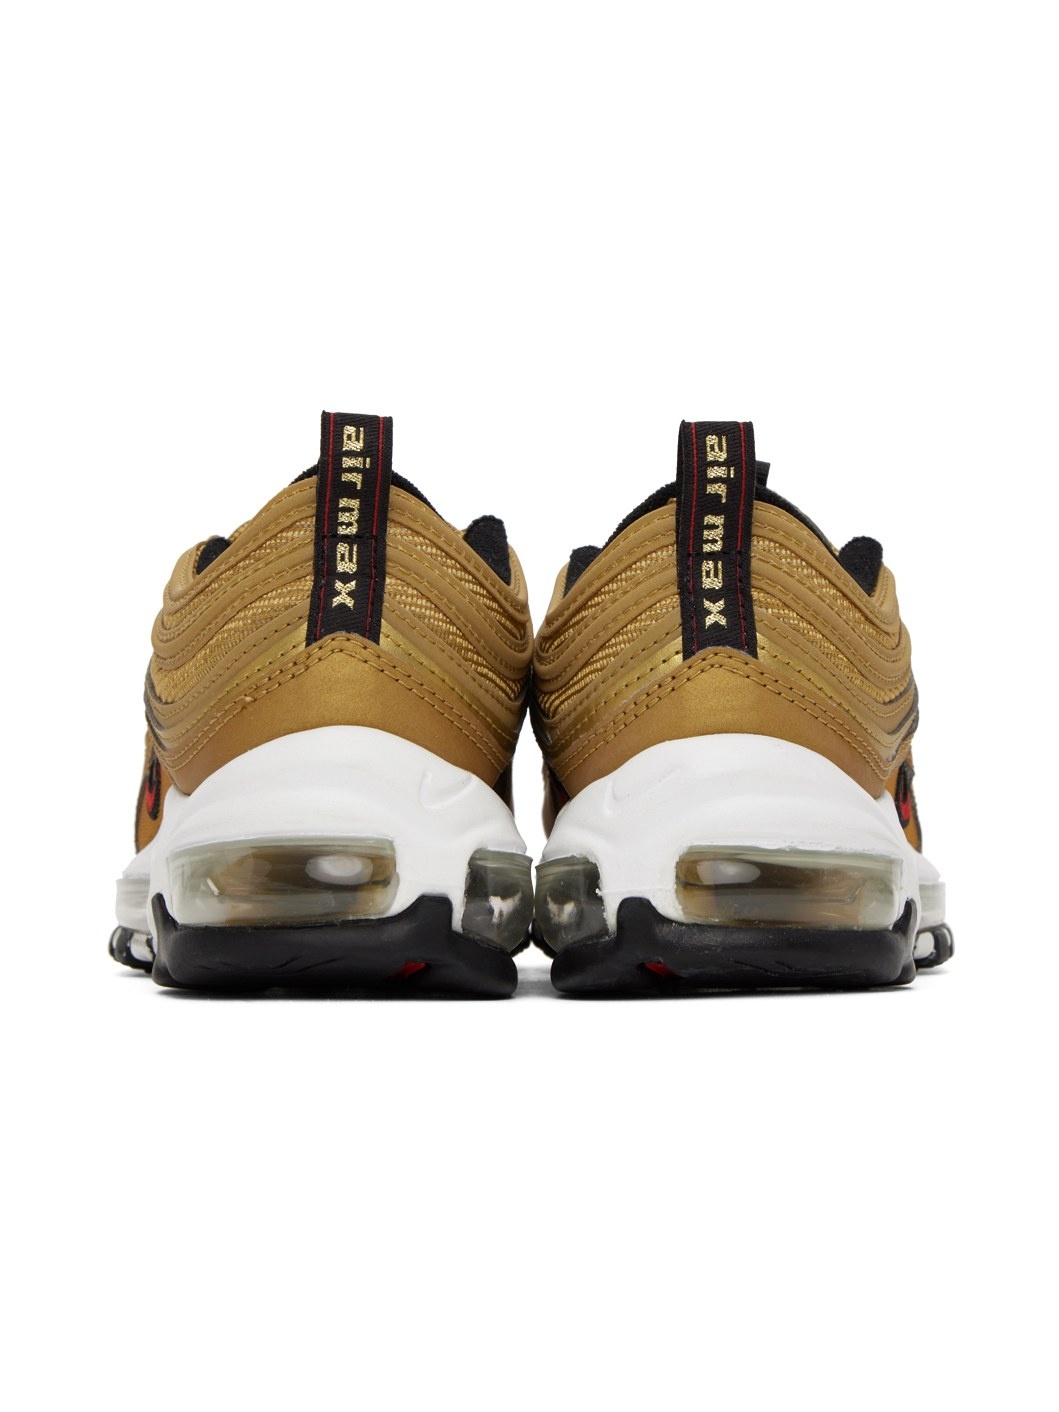 Gold Air Max 97 Golden Bullet Sneakers - 2